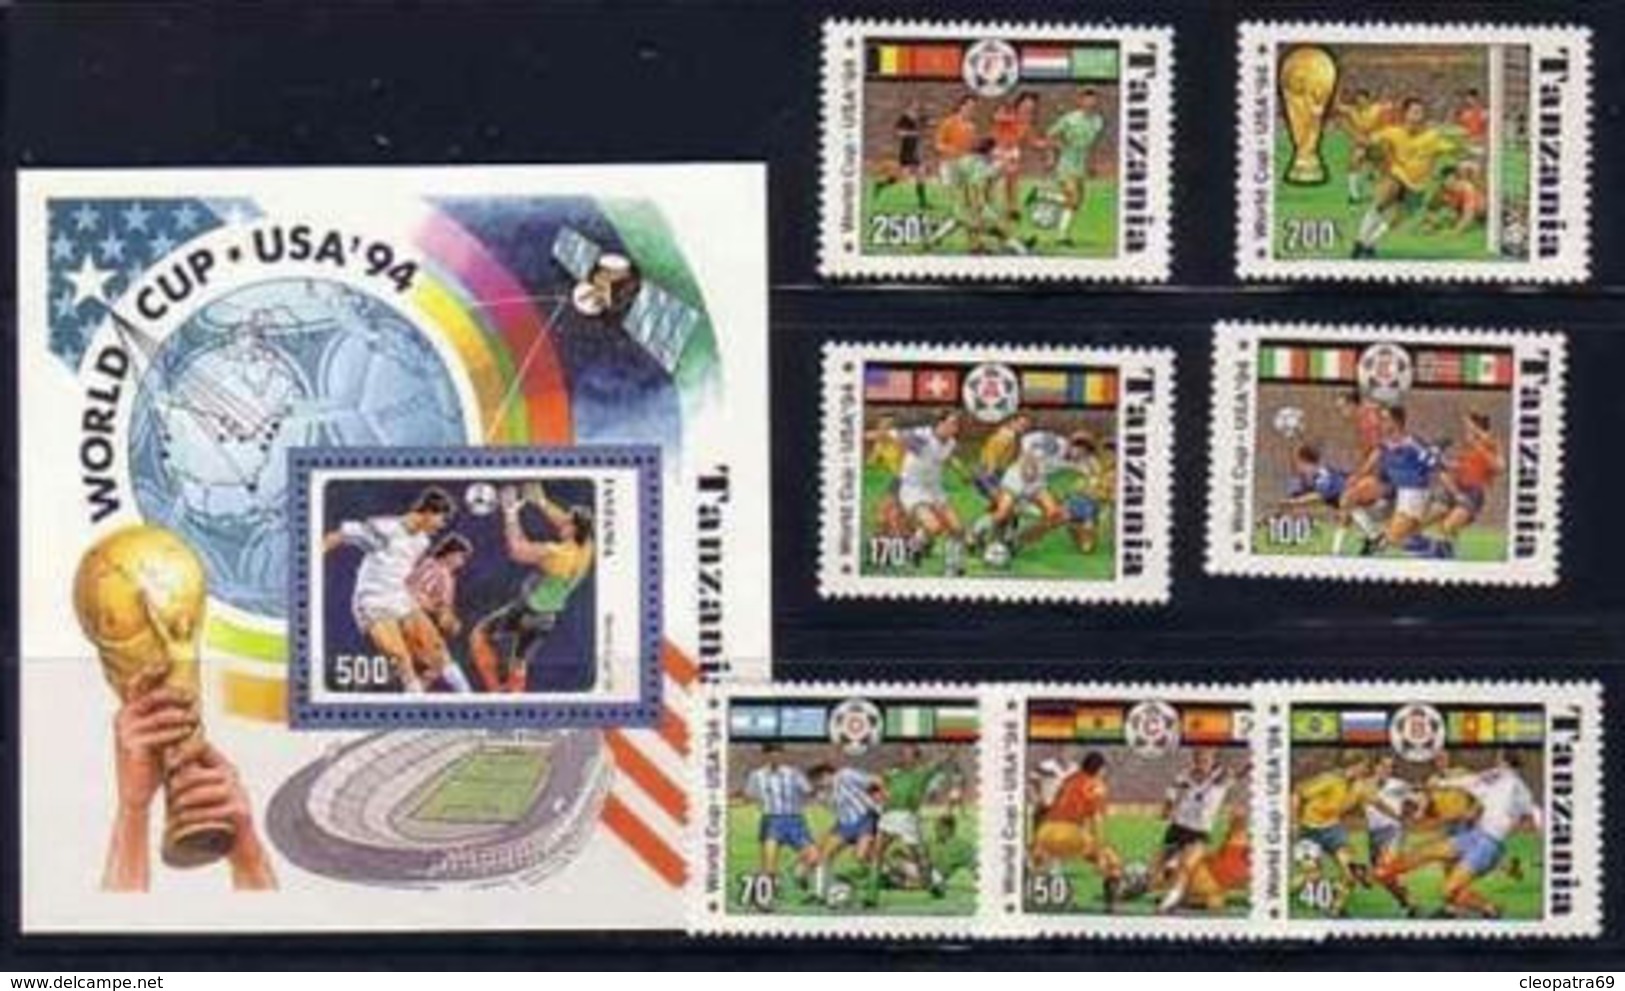 TANZANIA 1994 # 1174A-1174H SOUVENIR SHEET & SET MNH SOCCER WORLD CUP 94 4397RD-2 2018A - 1994 – USA